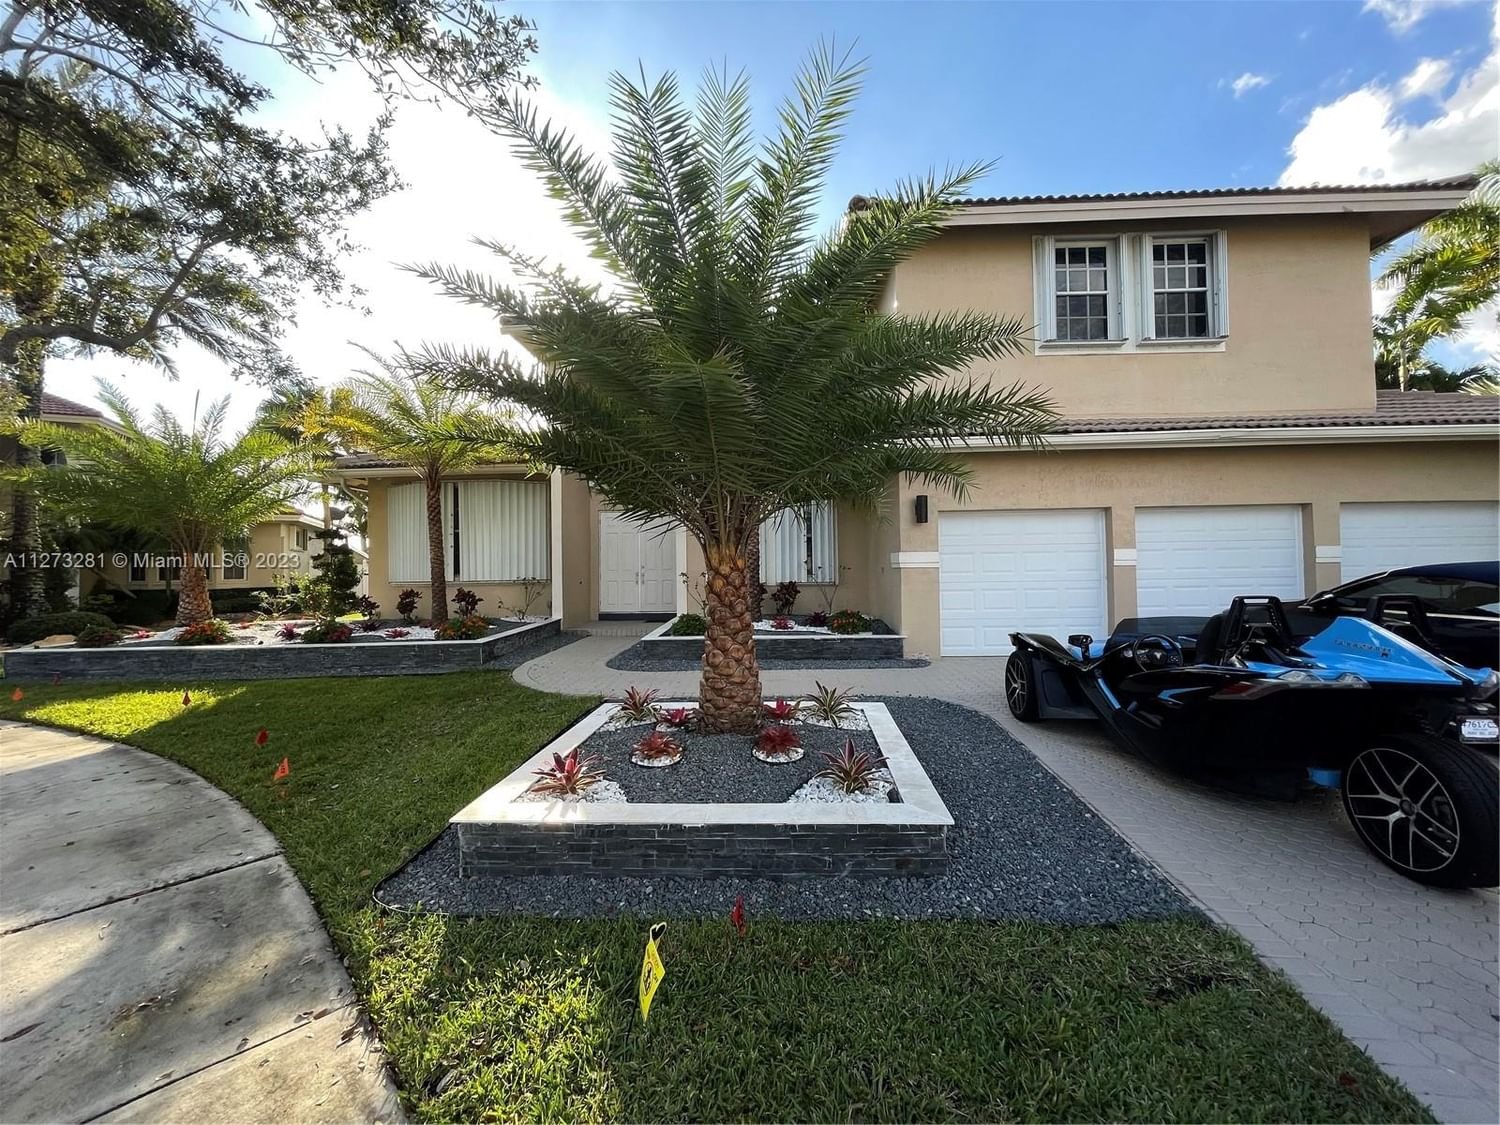 Real estate property located at 1324 173rd Way, Broward County, Pembroke Pines, FL